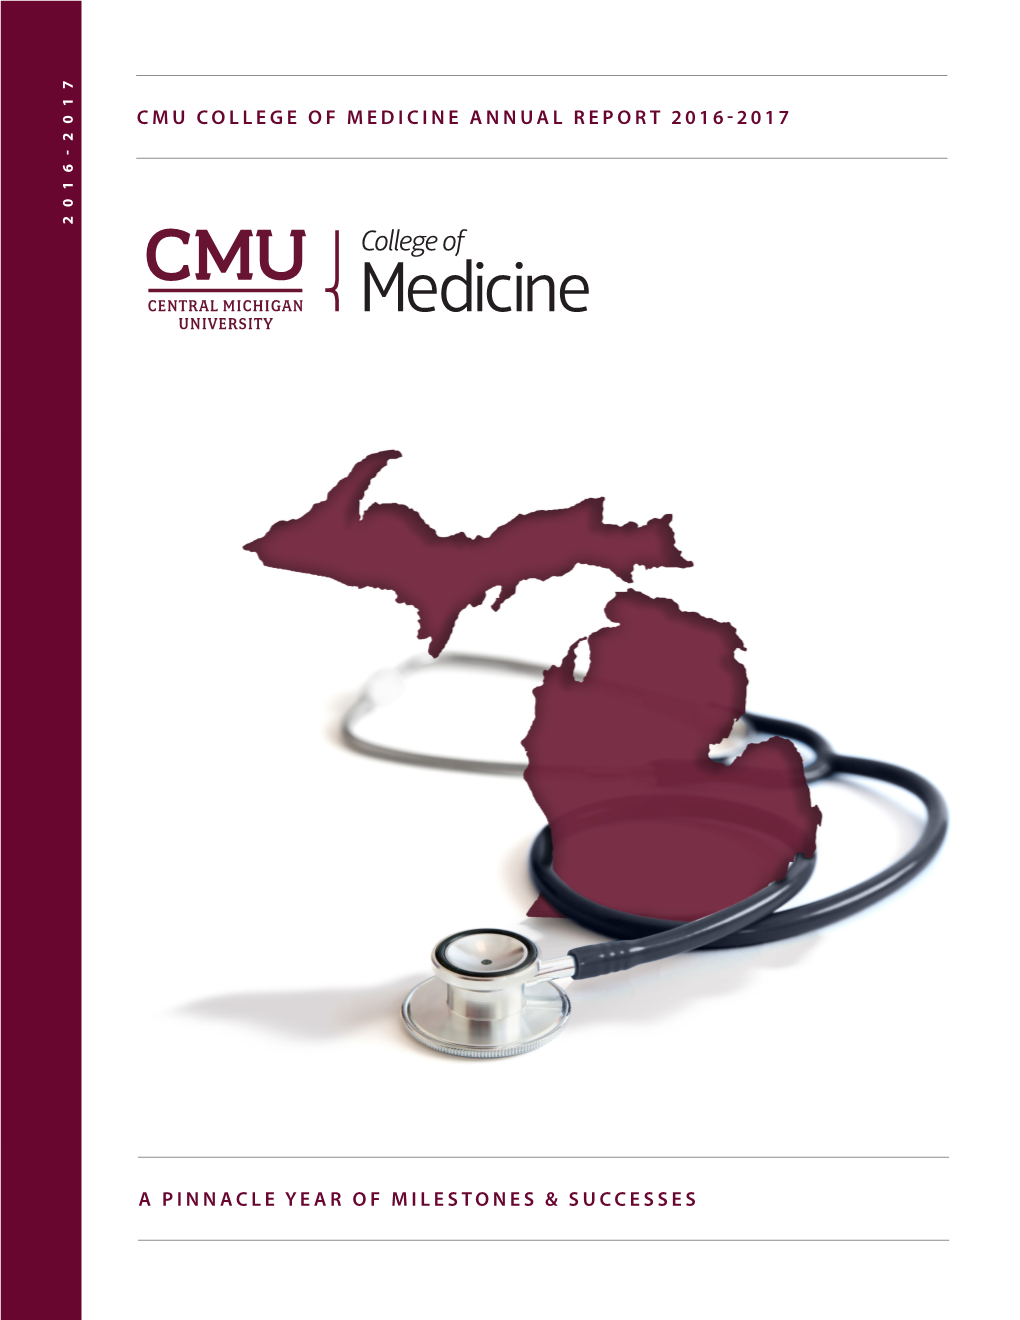 Cmu College of Medicine Annual Report 2016-2017 a Pinnacle Year of Milestones & Successes